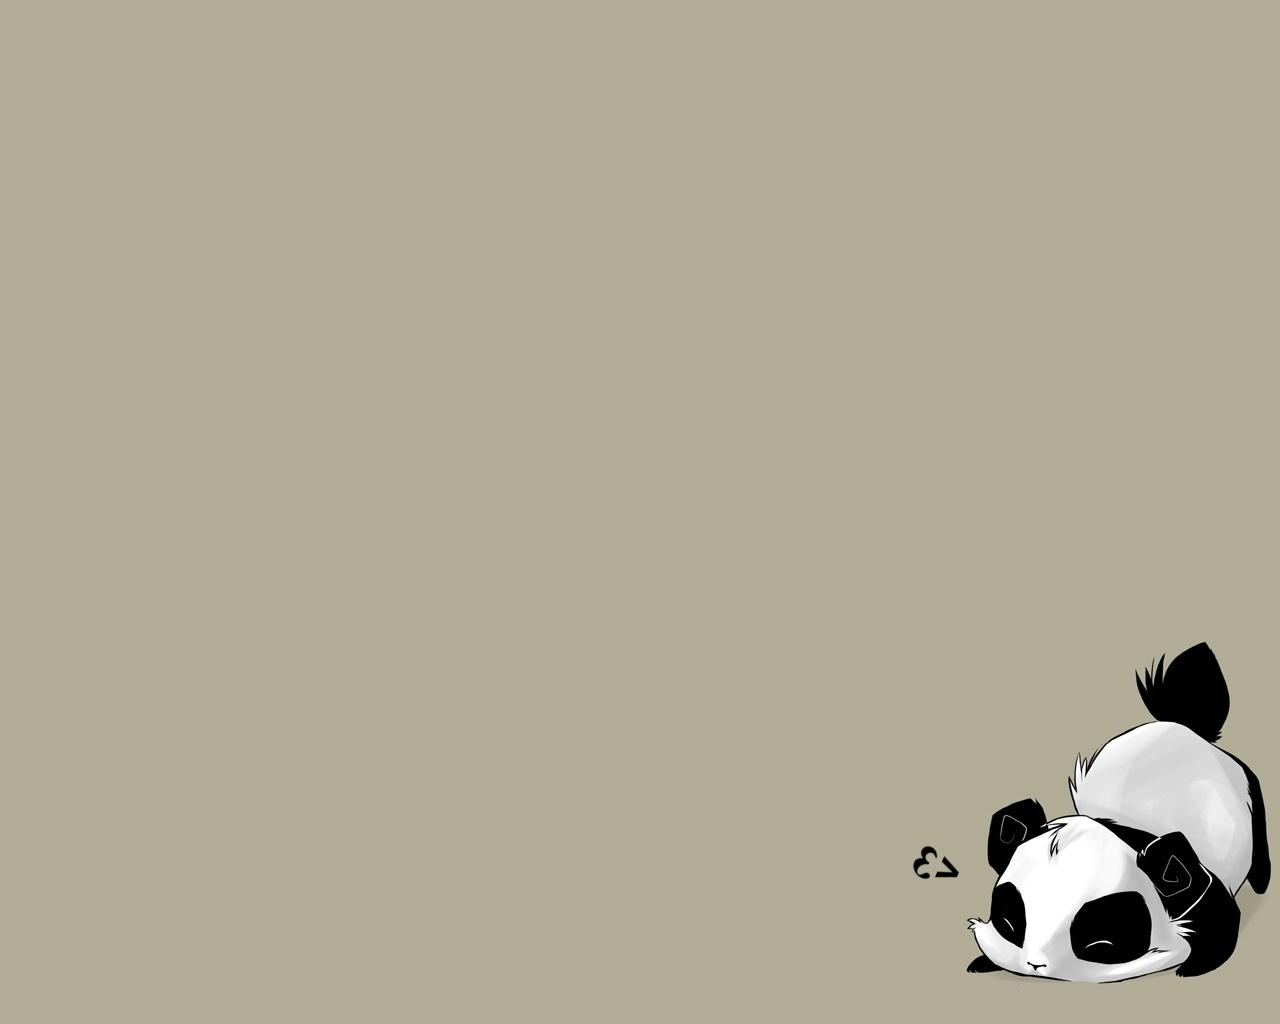 General 1280x1024 simple background animals artwork panda bears mammals minimalism